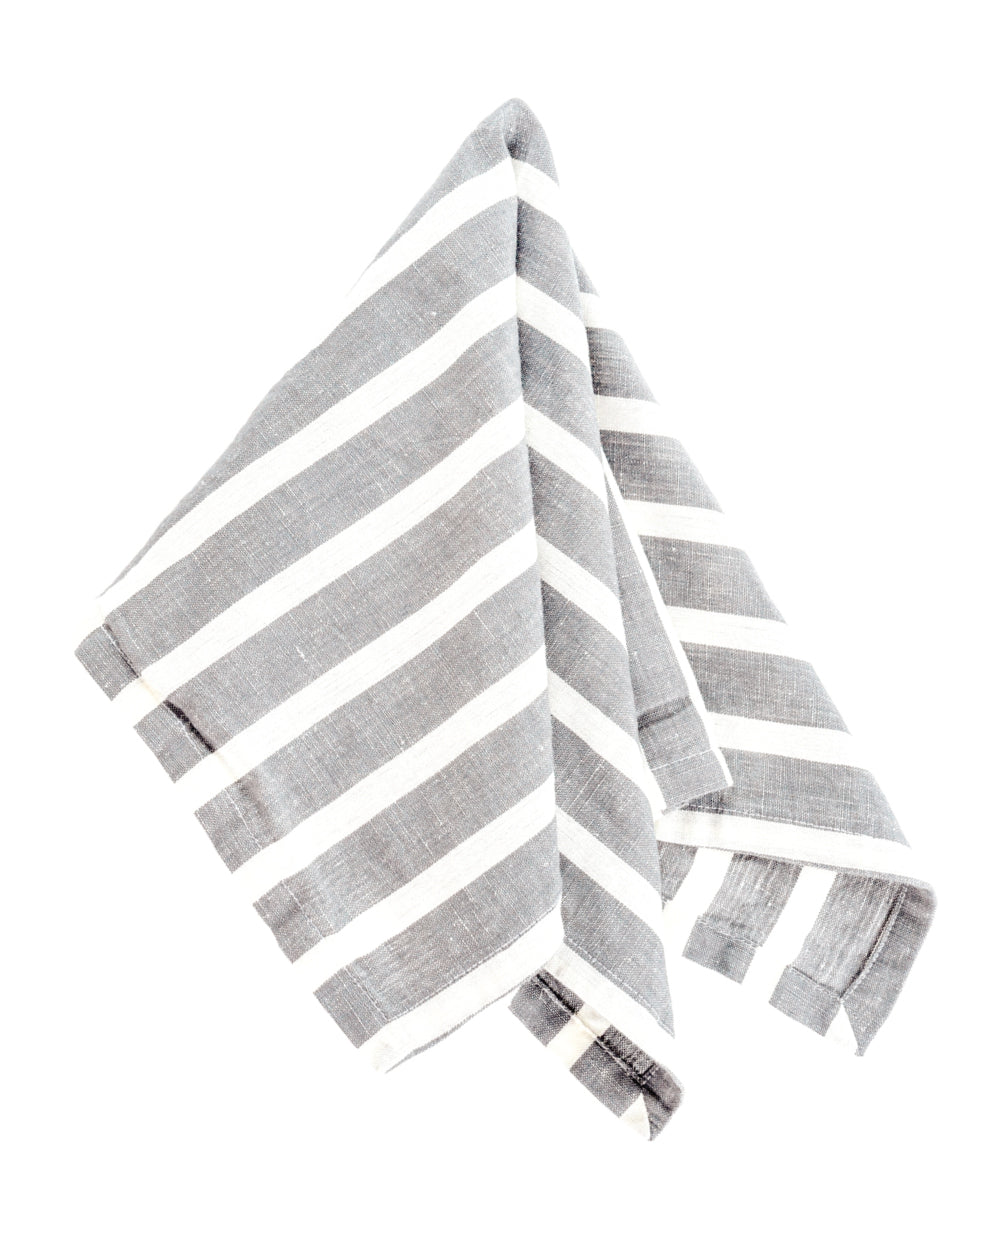 Marisol Striped Napkins, Grey (Set of Two)